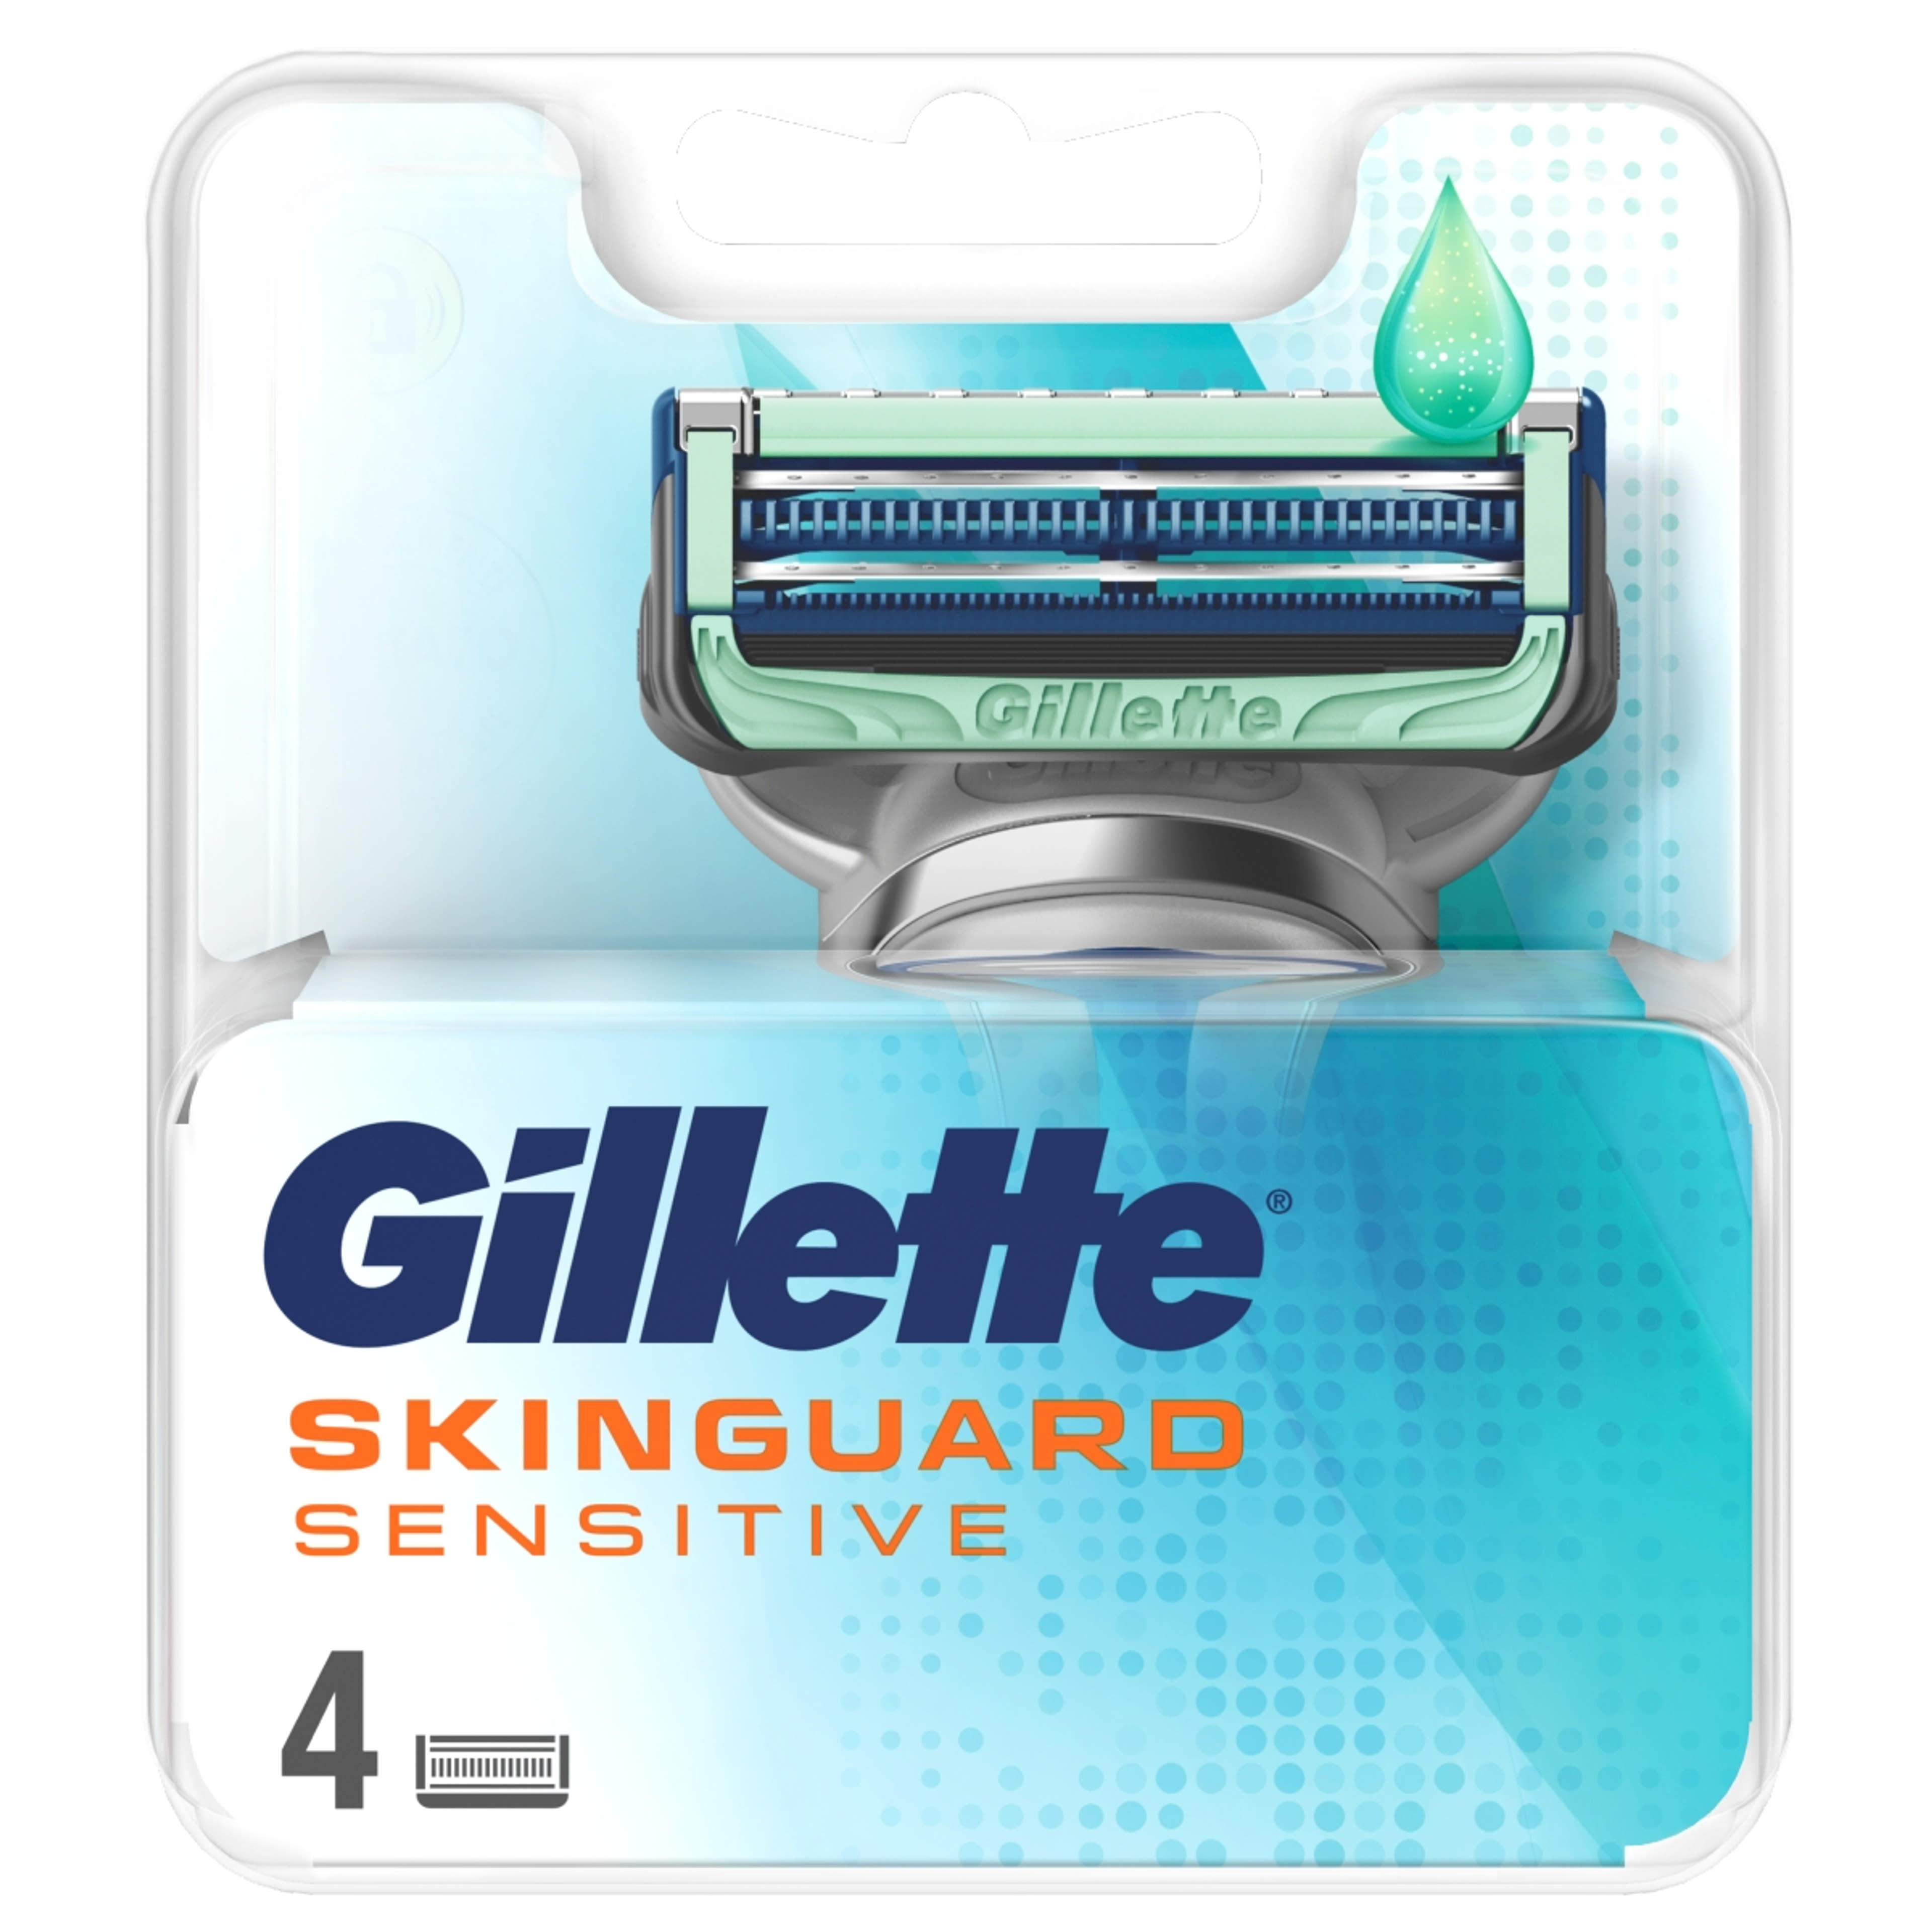 Gillette Skinguard borotvabetét - 4 db